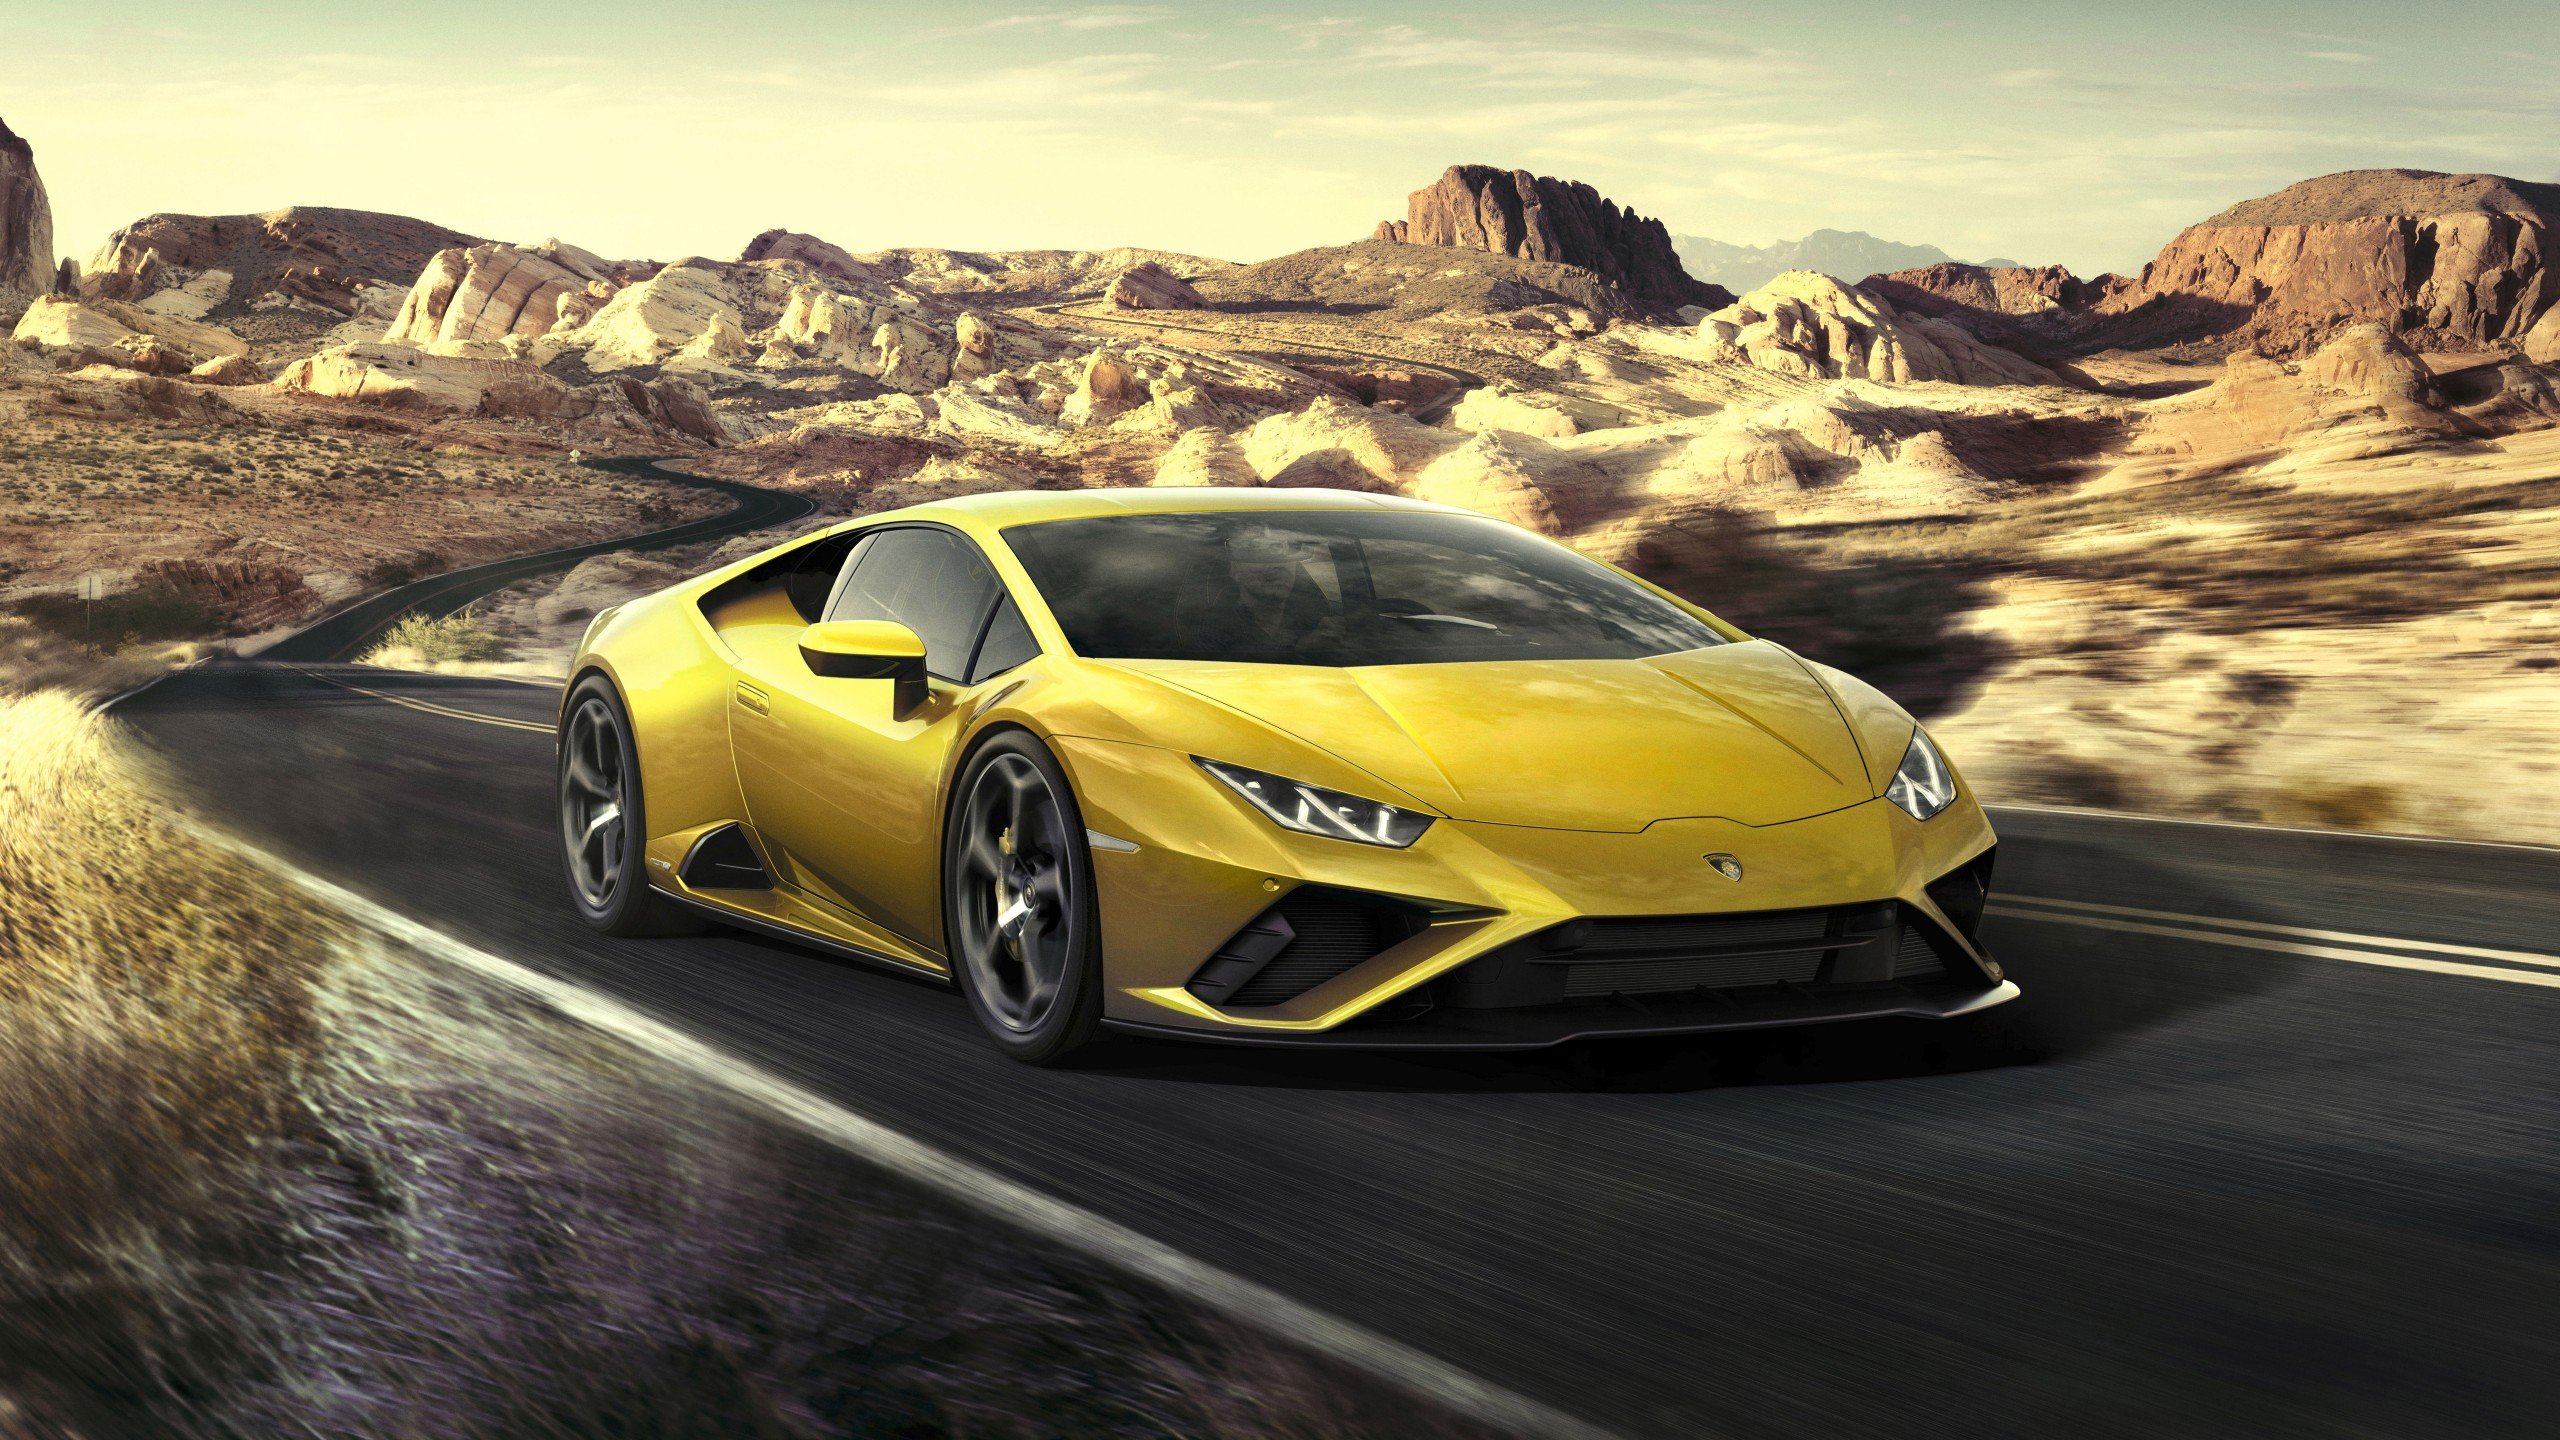 Wallpaper ID 127886  Lamborghini Lamborghini Huracan yellow supercars  frontal view free download